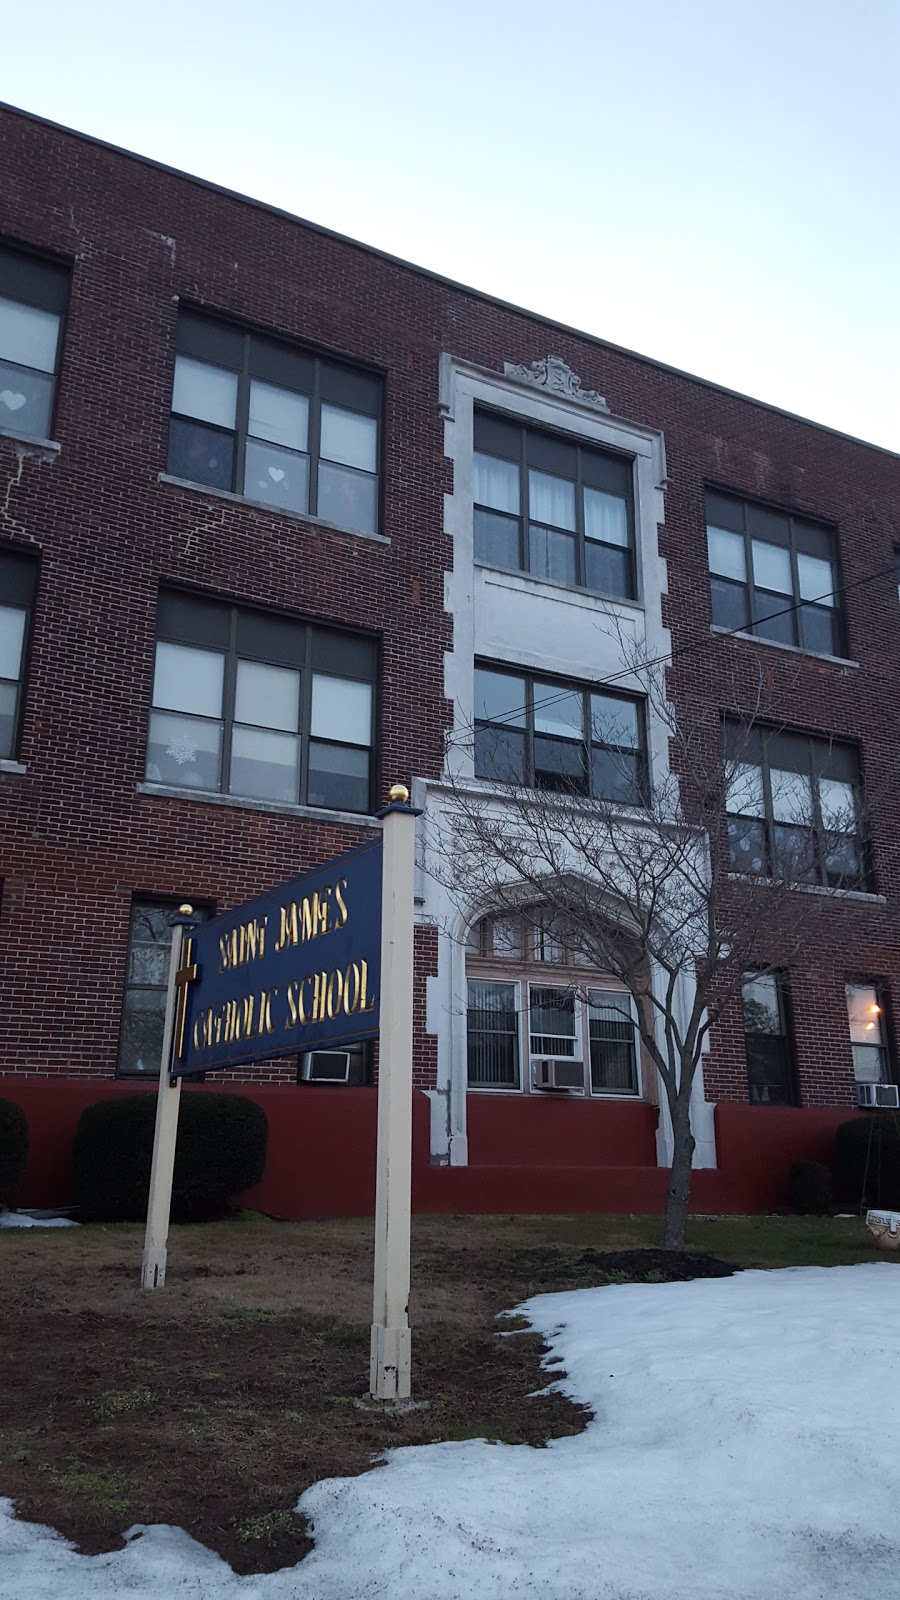 Photo of Saint James School in Woodbridge City, New Jersey, United States - 1 Picture of Point of interest, Establishment, School